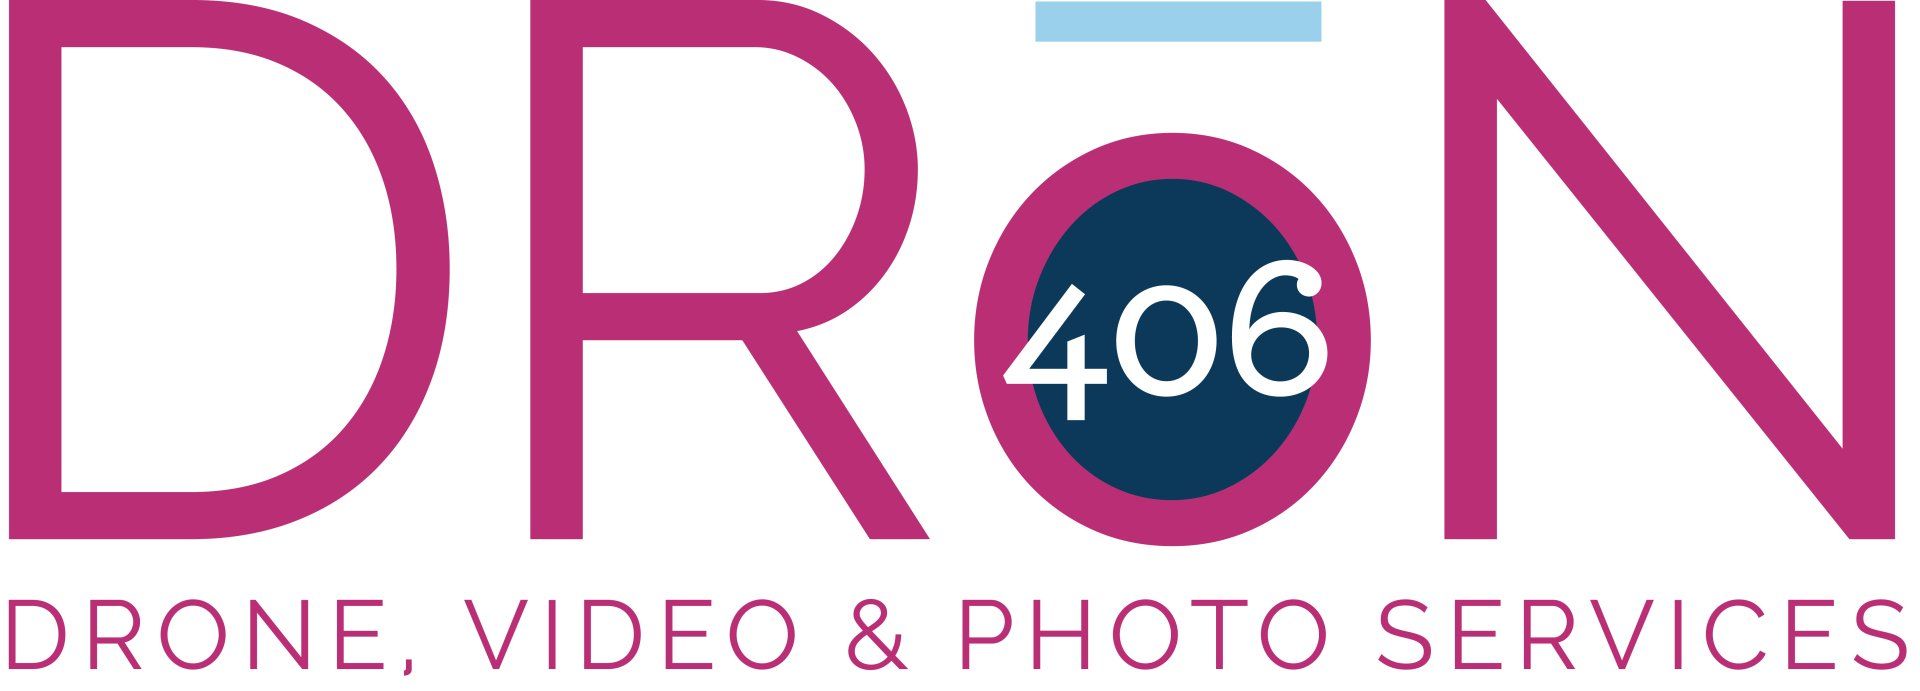 DRōN 406
Drone, Video & Photo services logo